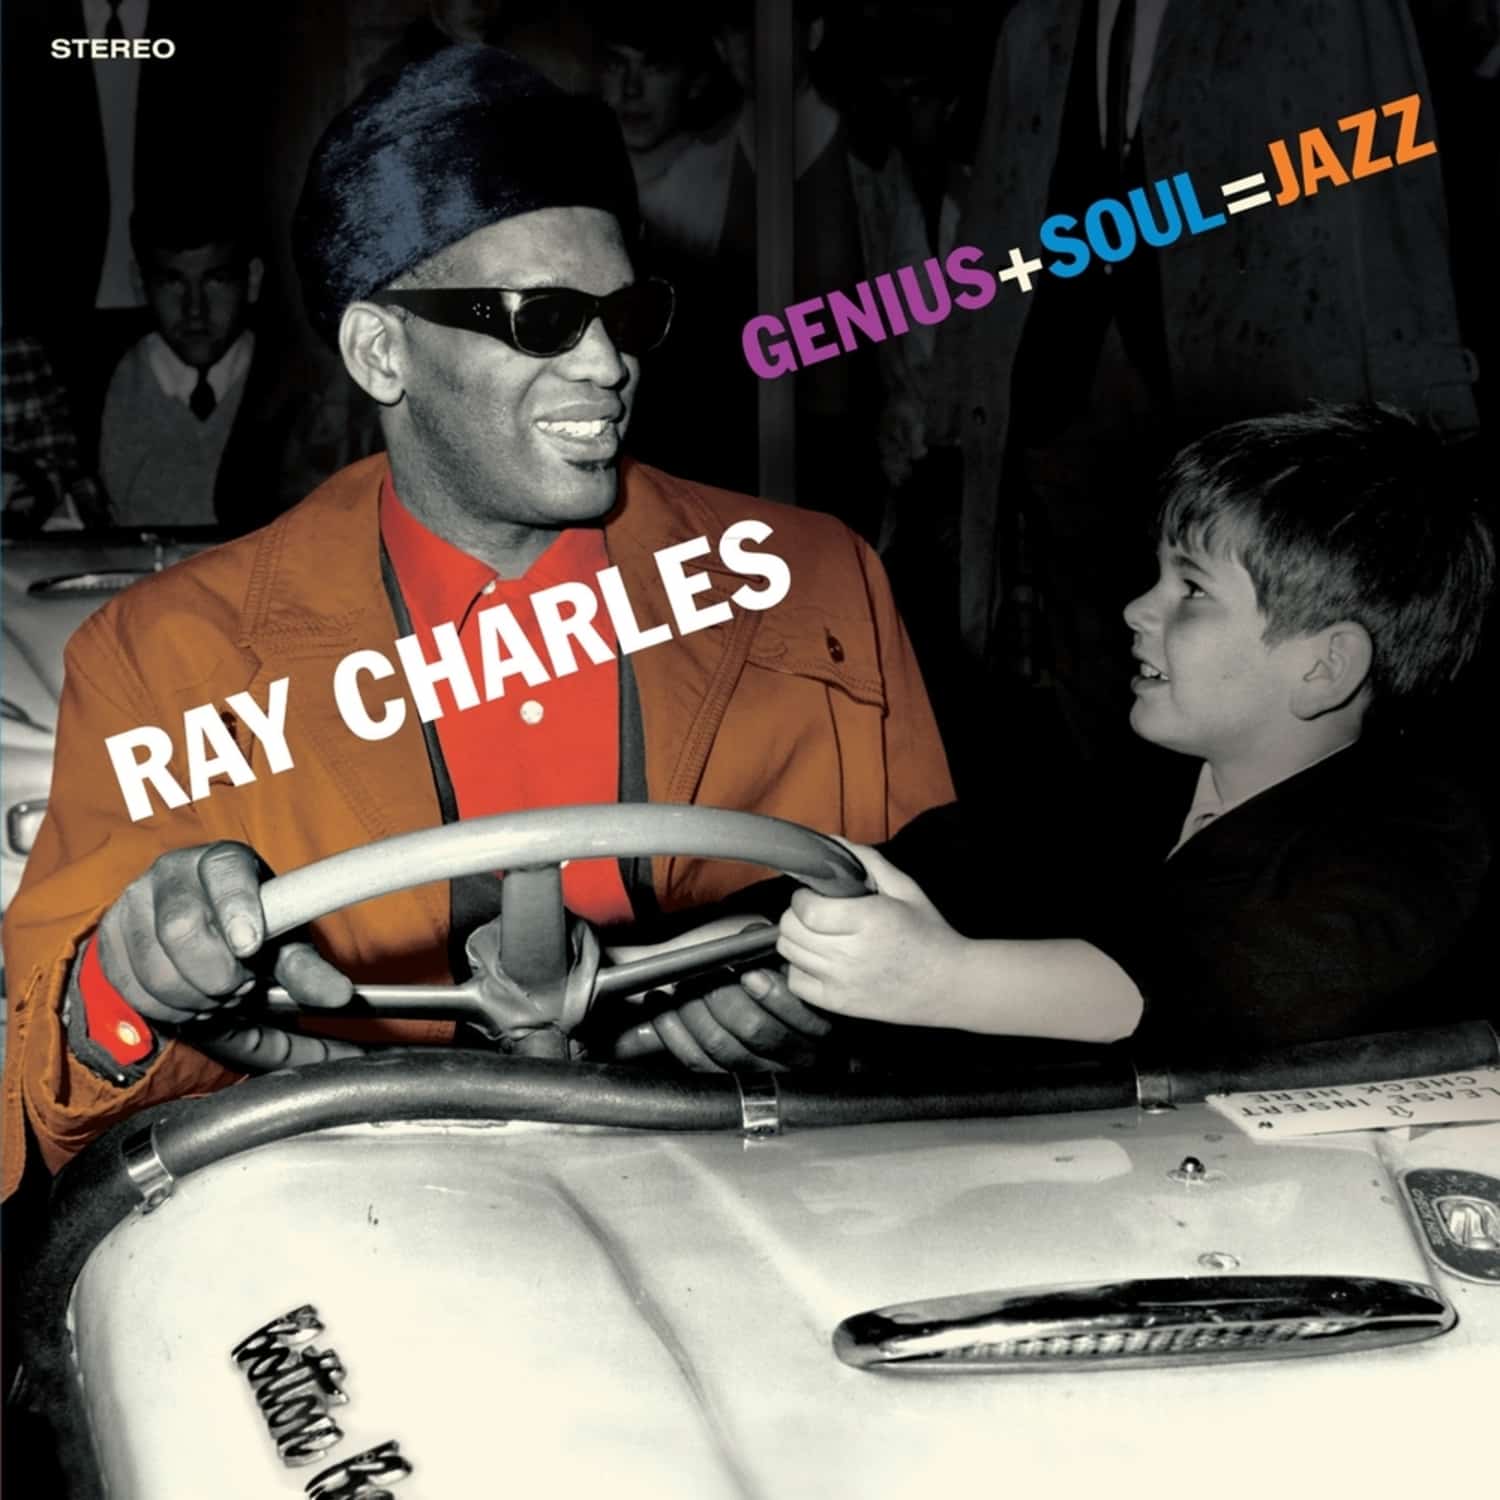 Ray Charles - GENIUS+SOUL = JAZZ 